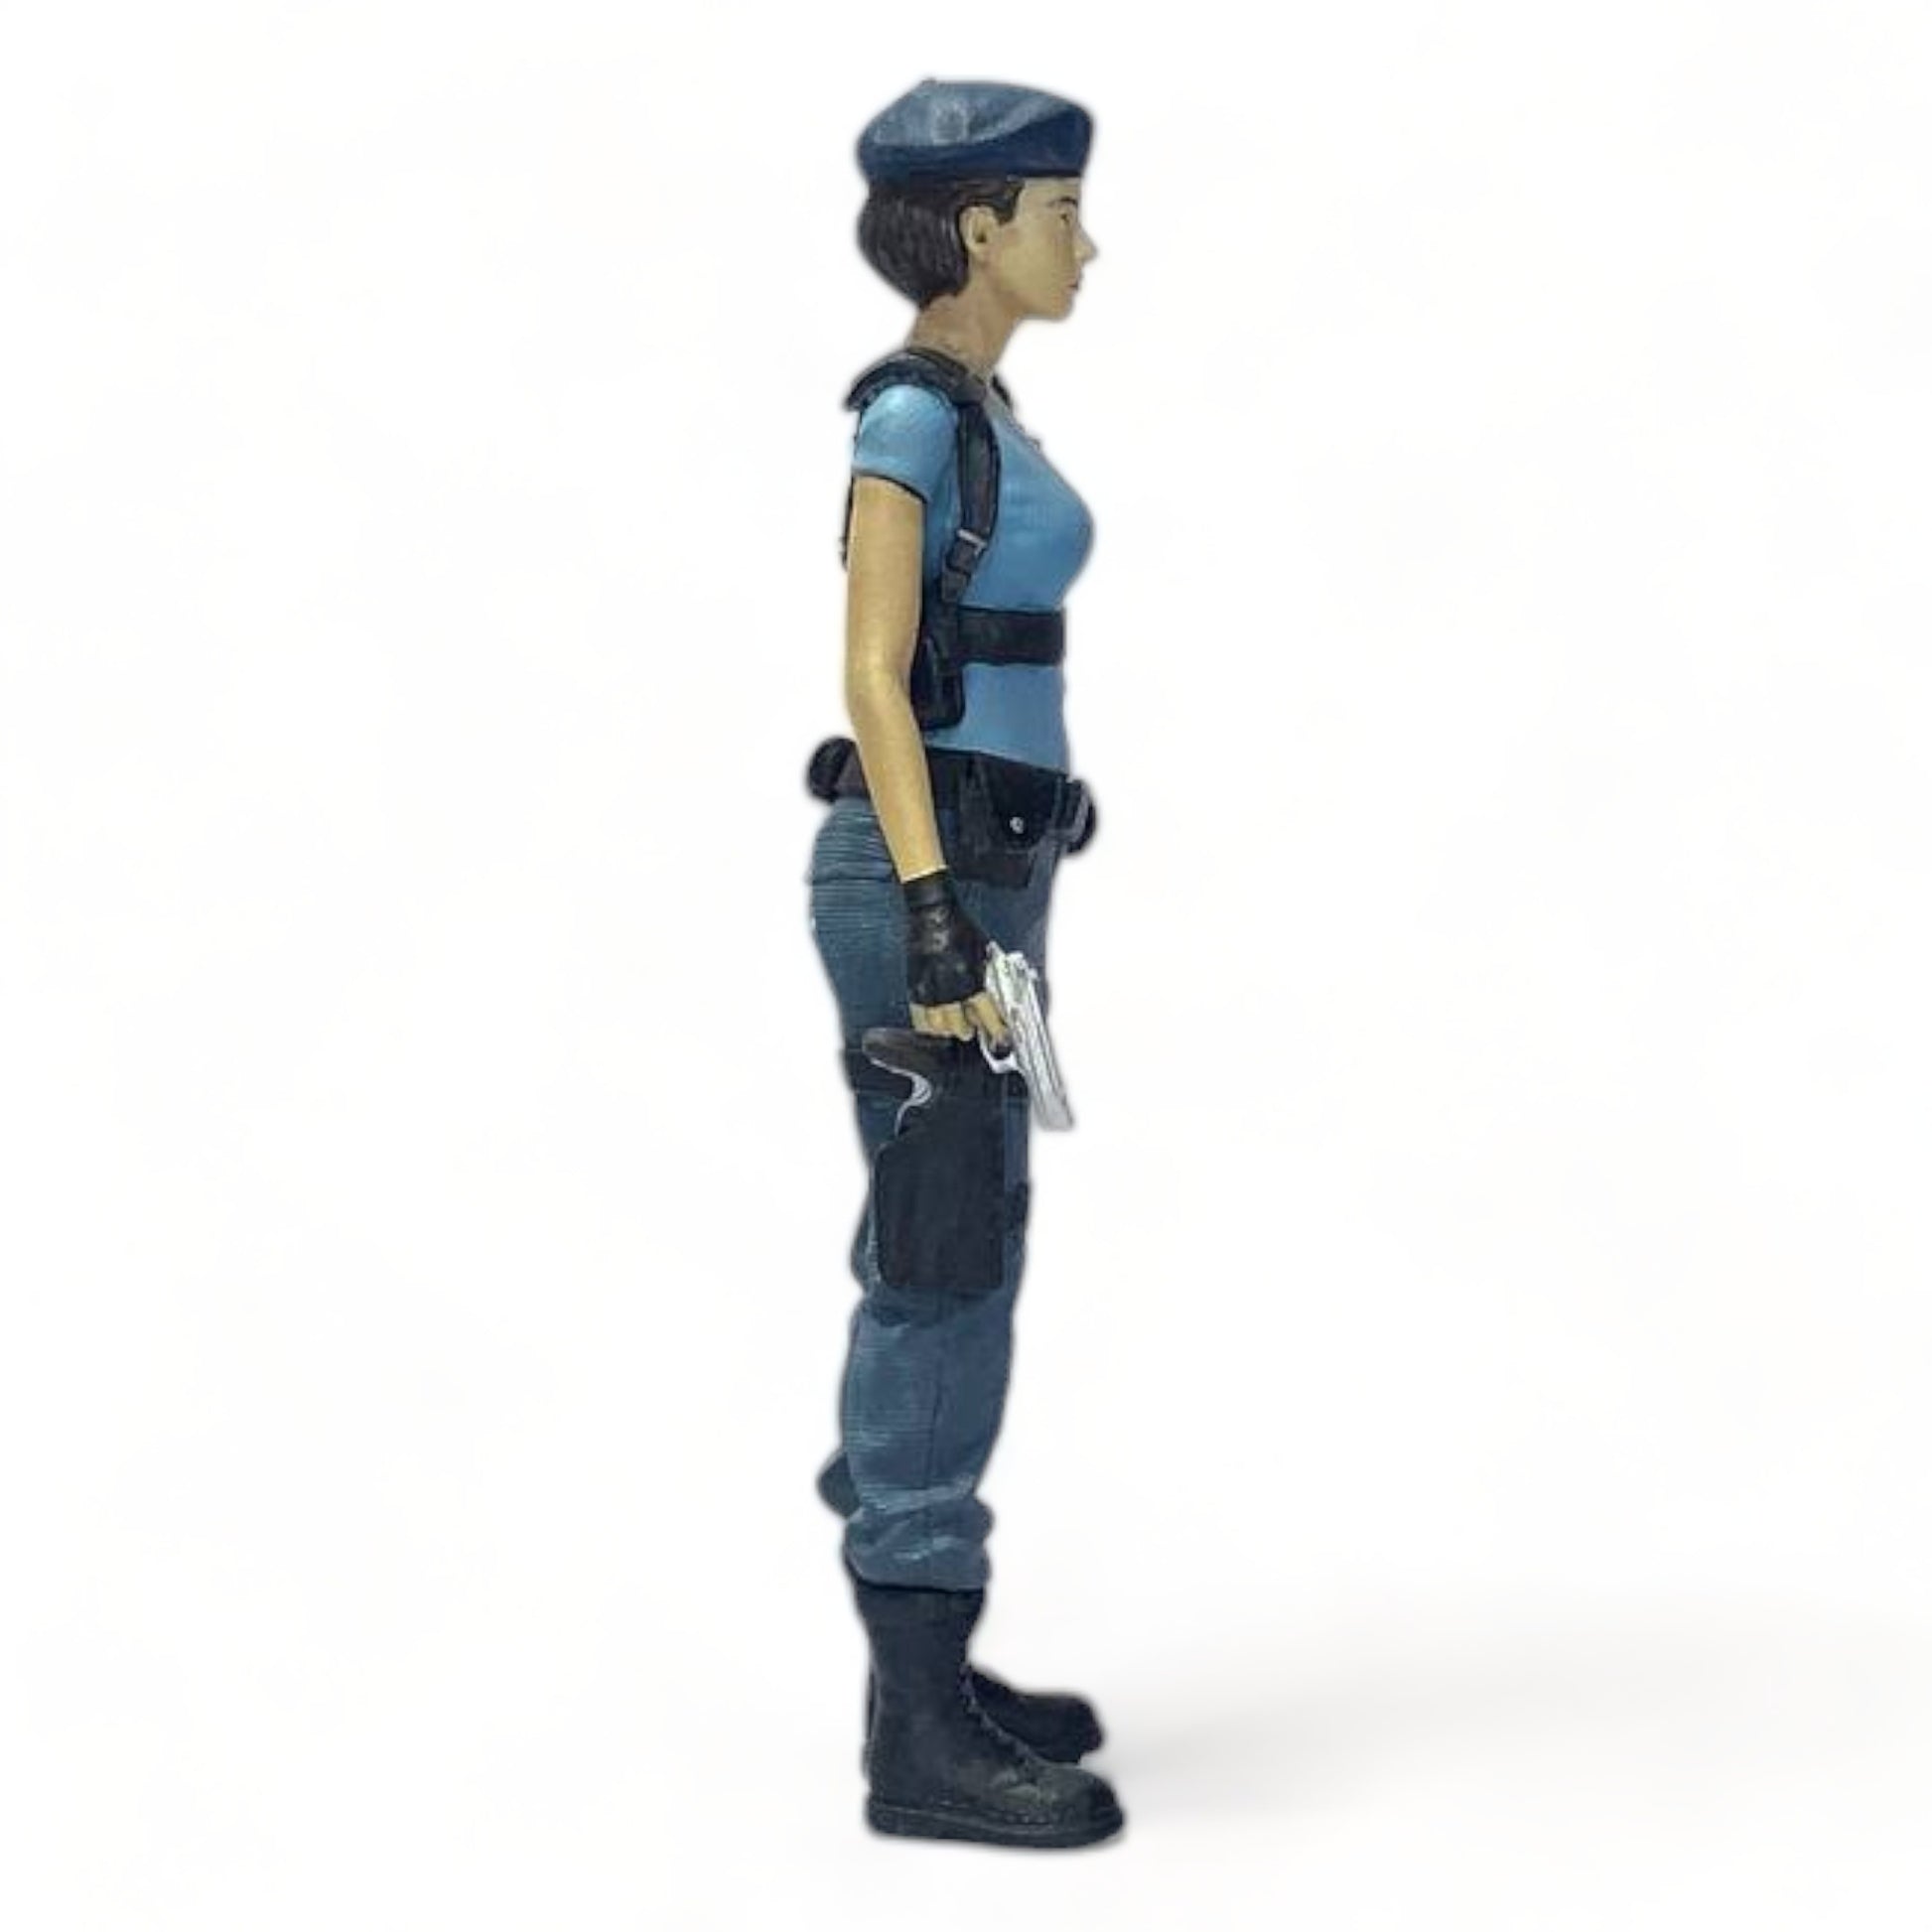 1/18 Scale Figure Set  Jill Valentine - Resident Evil Characters|Sold in Dturman.com Dubai UAE.